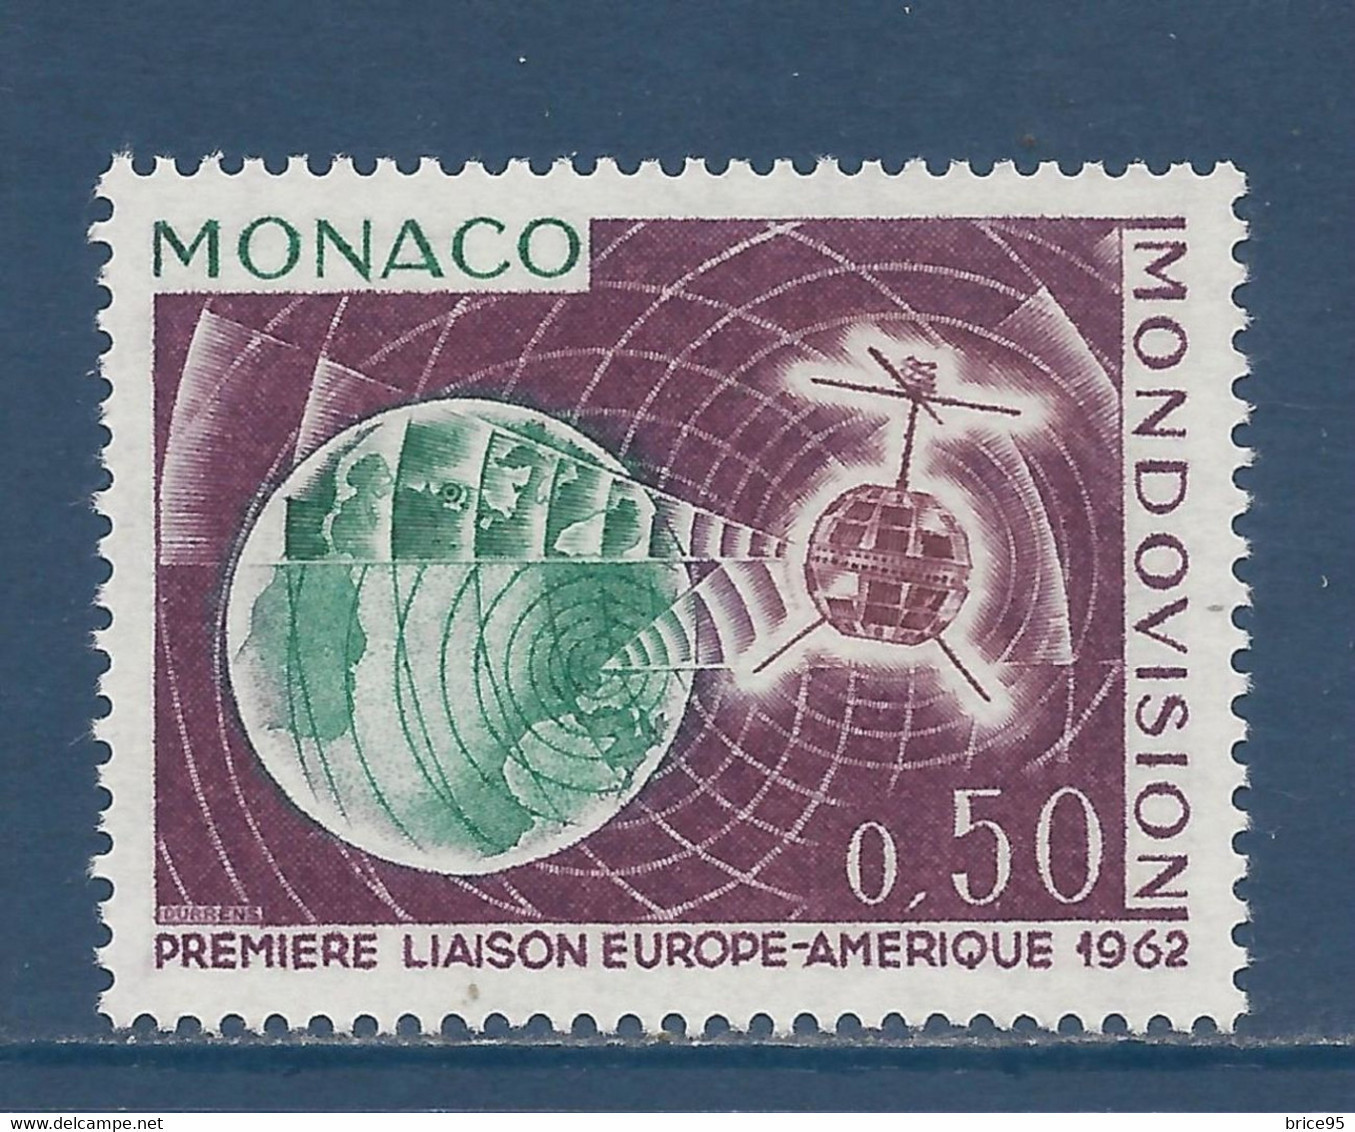 Monaco - YT N° 612 ** - Neuf Sans Charnière - 1963 - Nuovi